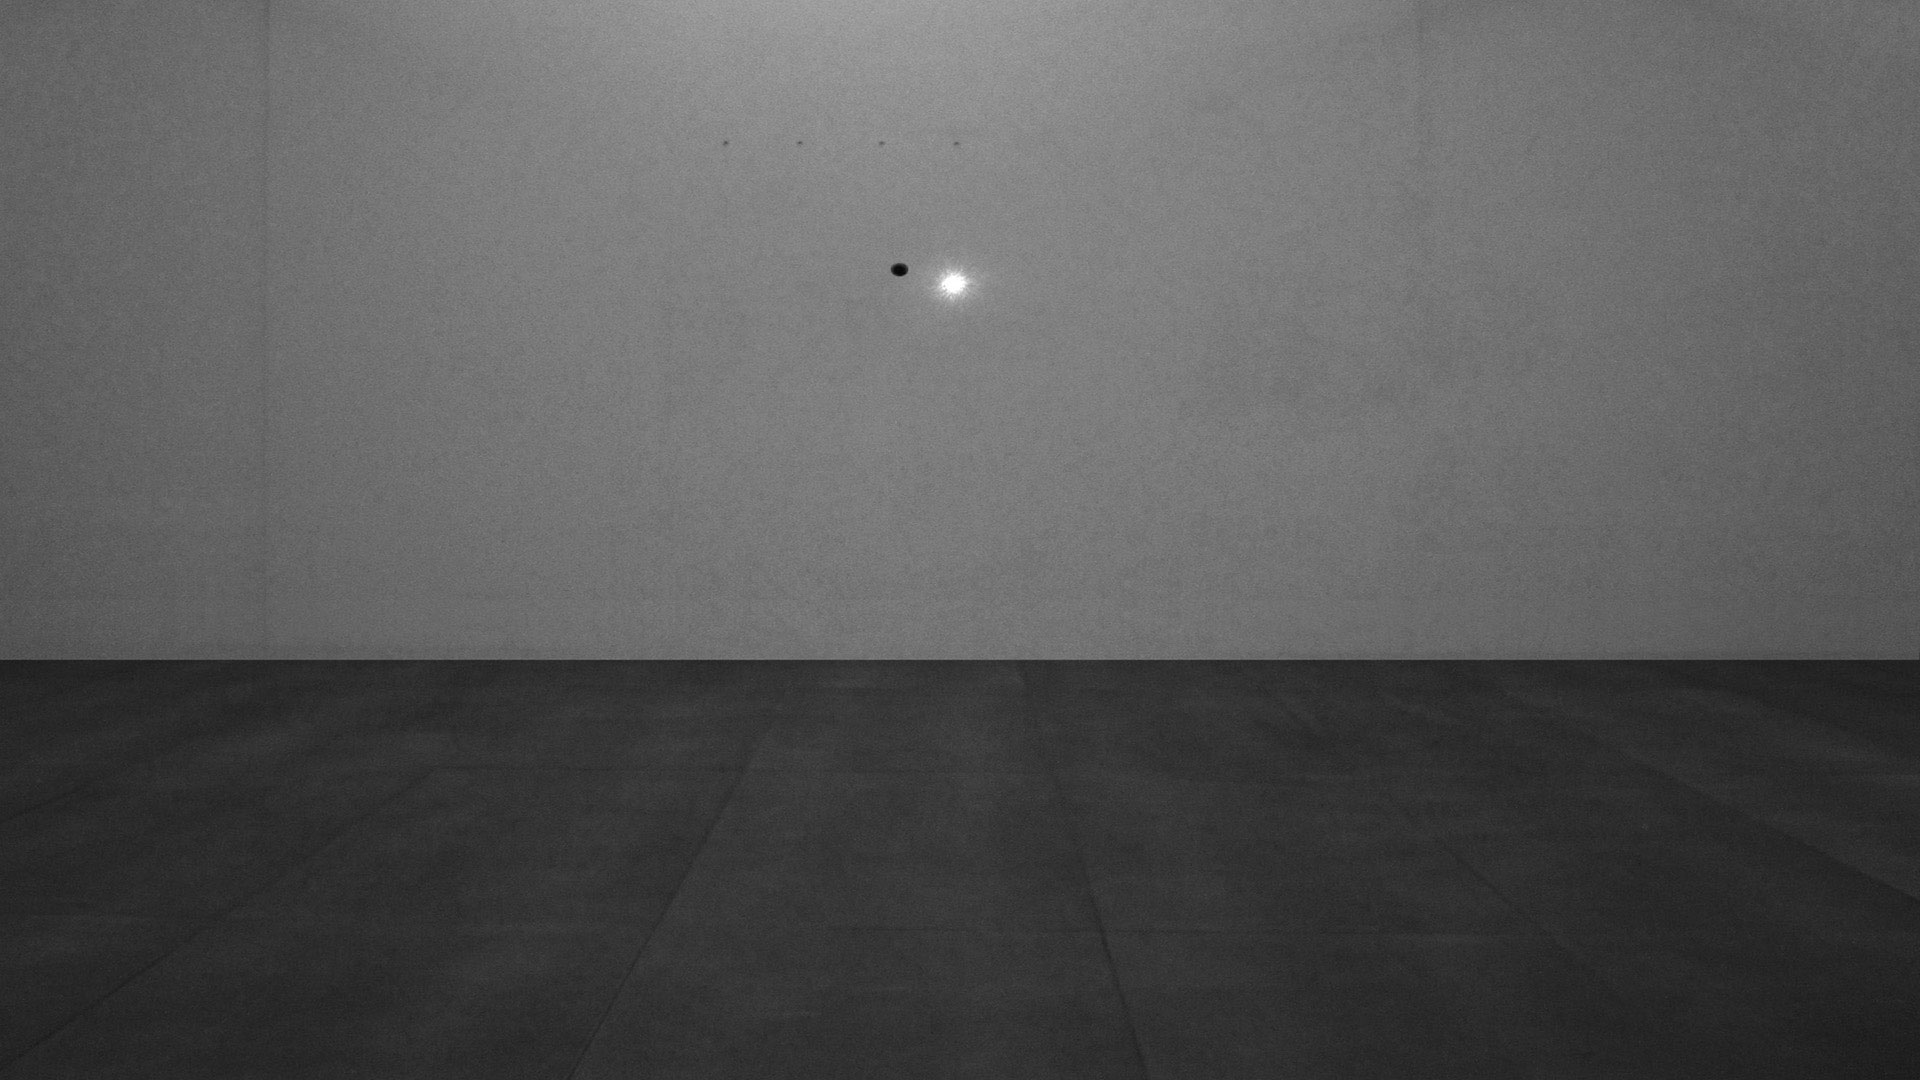 HR-Stamenov, Black Hole VS Light Hole, 2011, light intervention, Spinola Banna Foundation, Turin